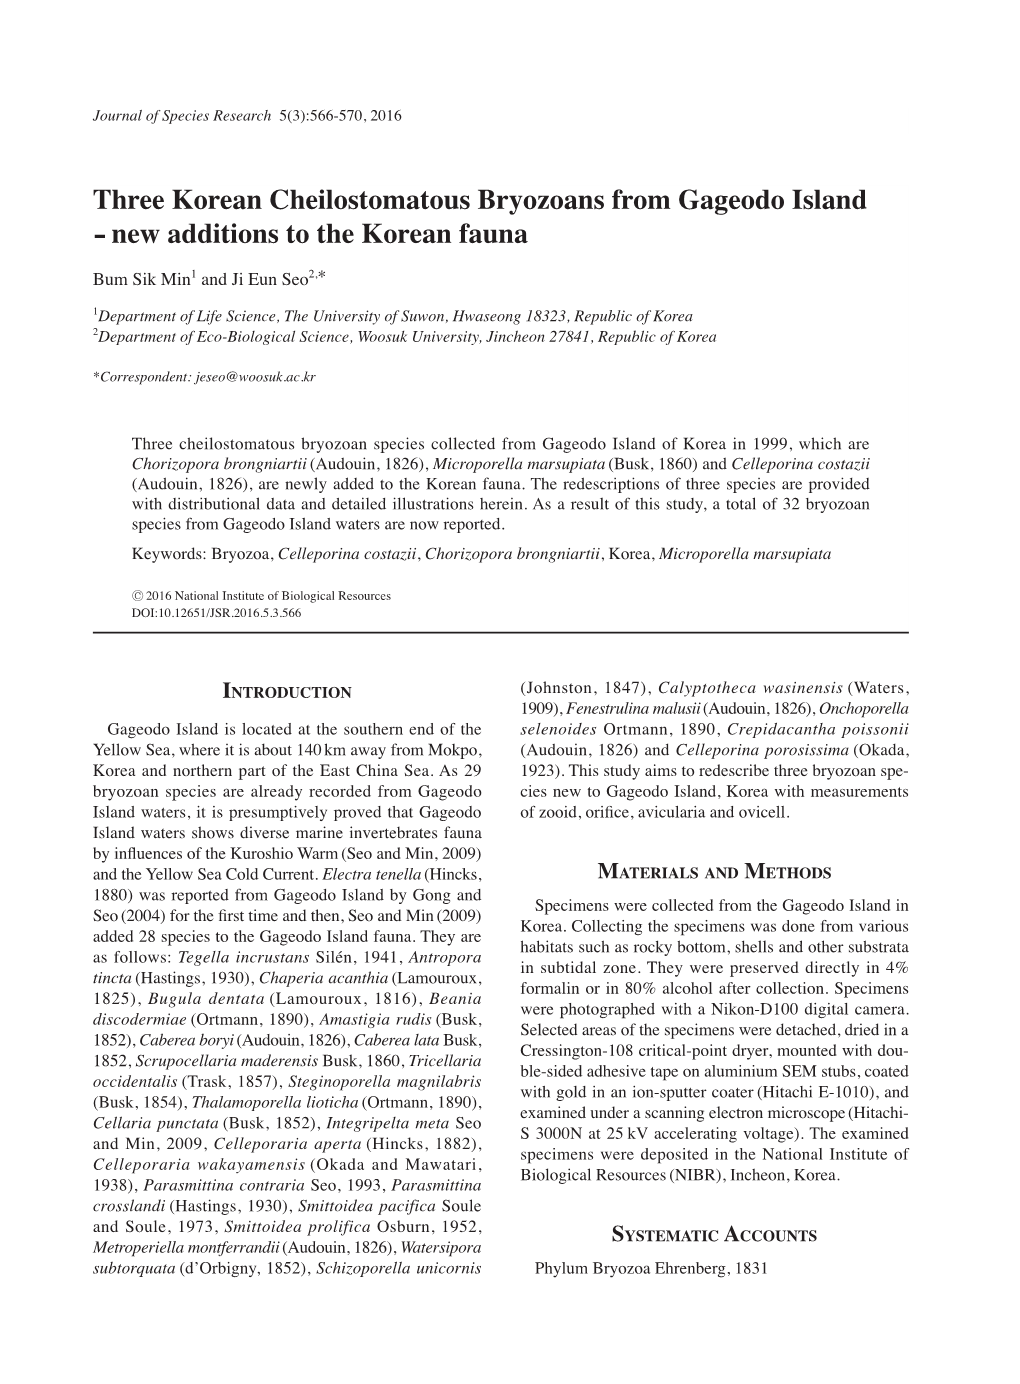 Three Korean Cheilostomatous Bryozoans from Gageodo Island - New Additions to the Korean Fauna